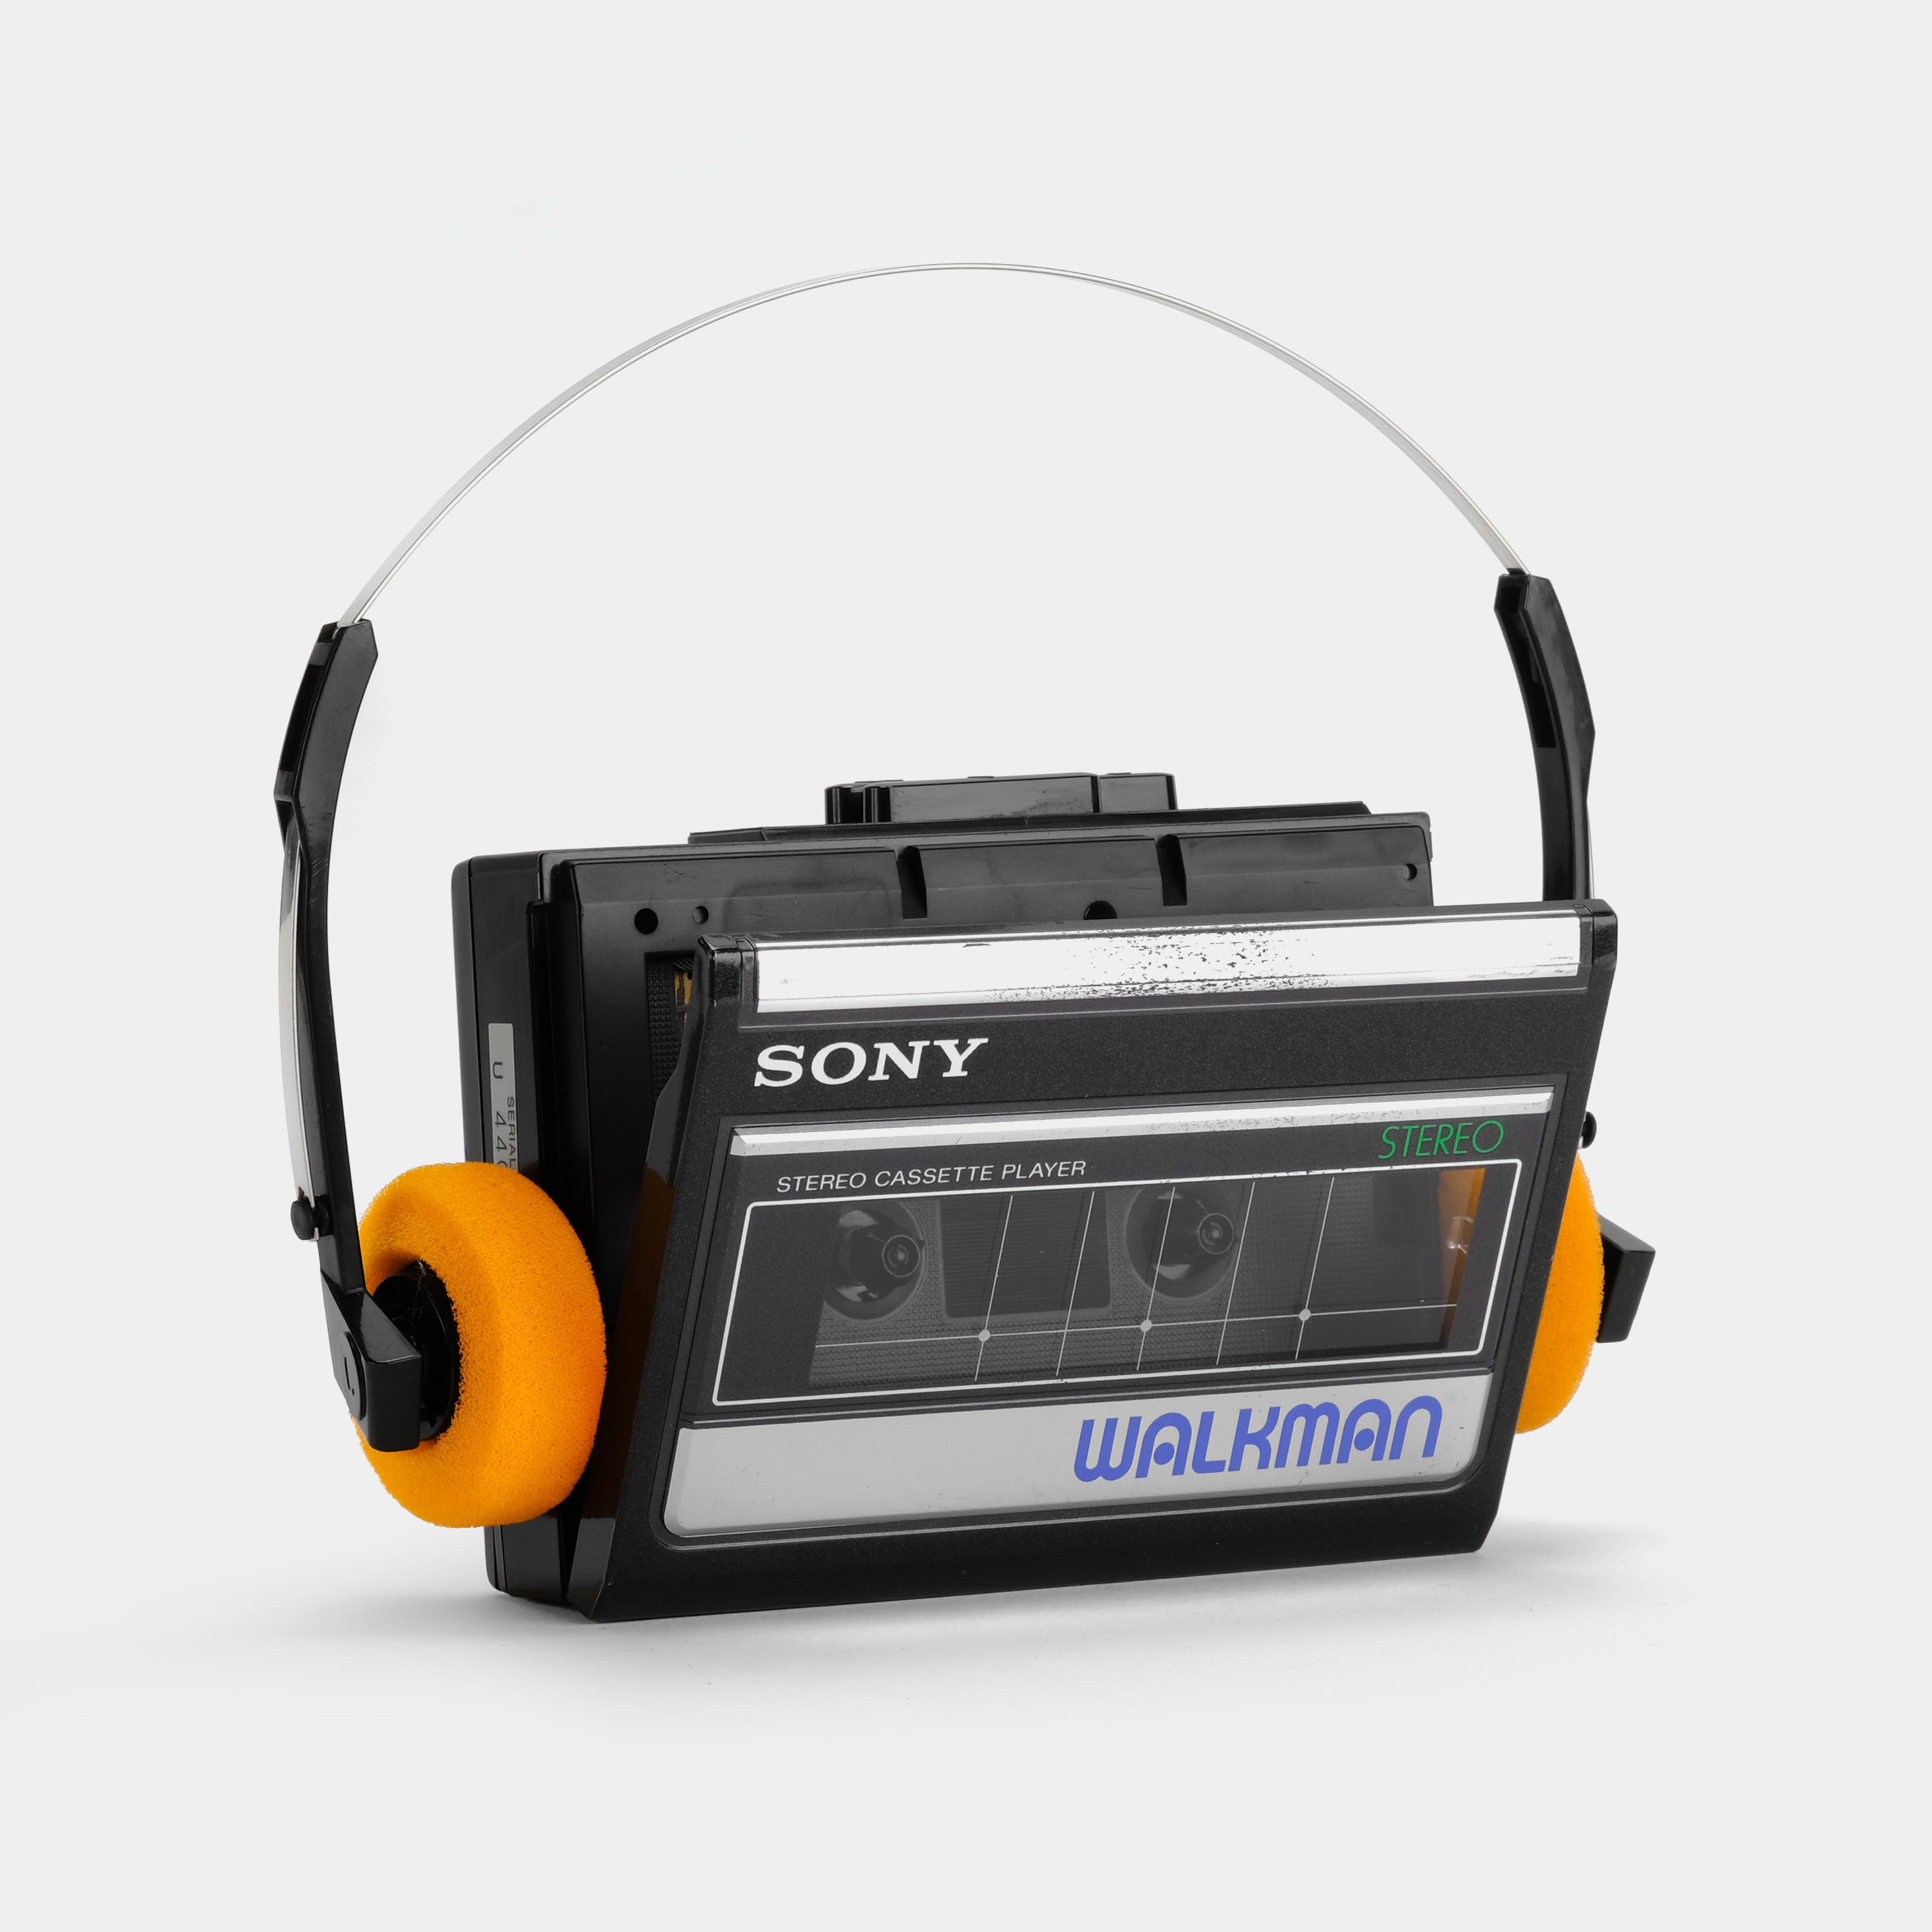 Sony Walkman WM-41 Portable Cassette Player